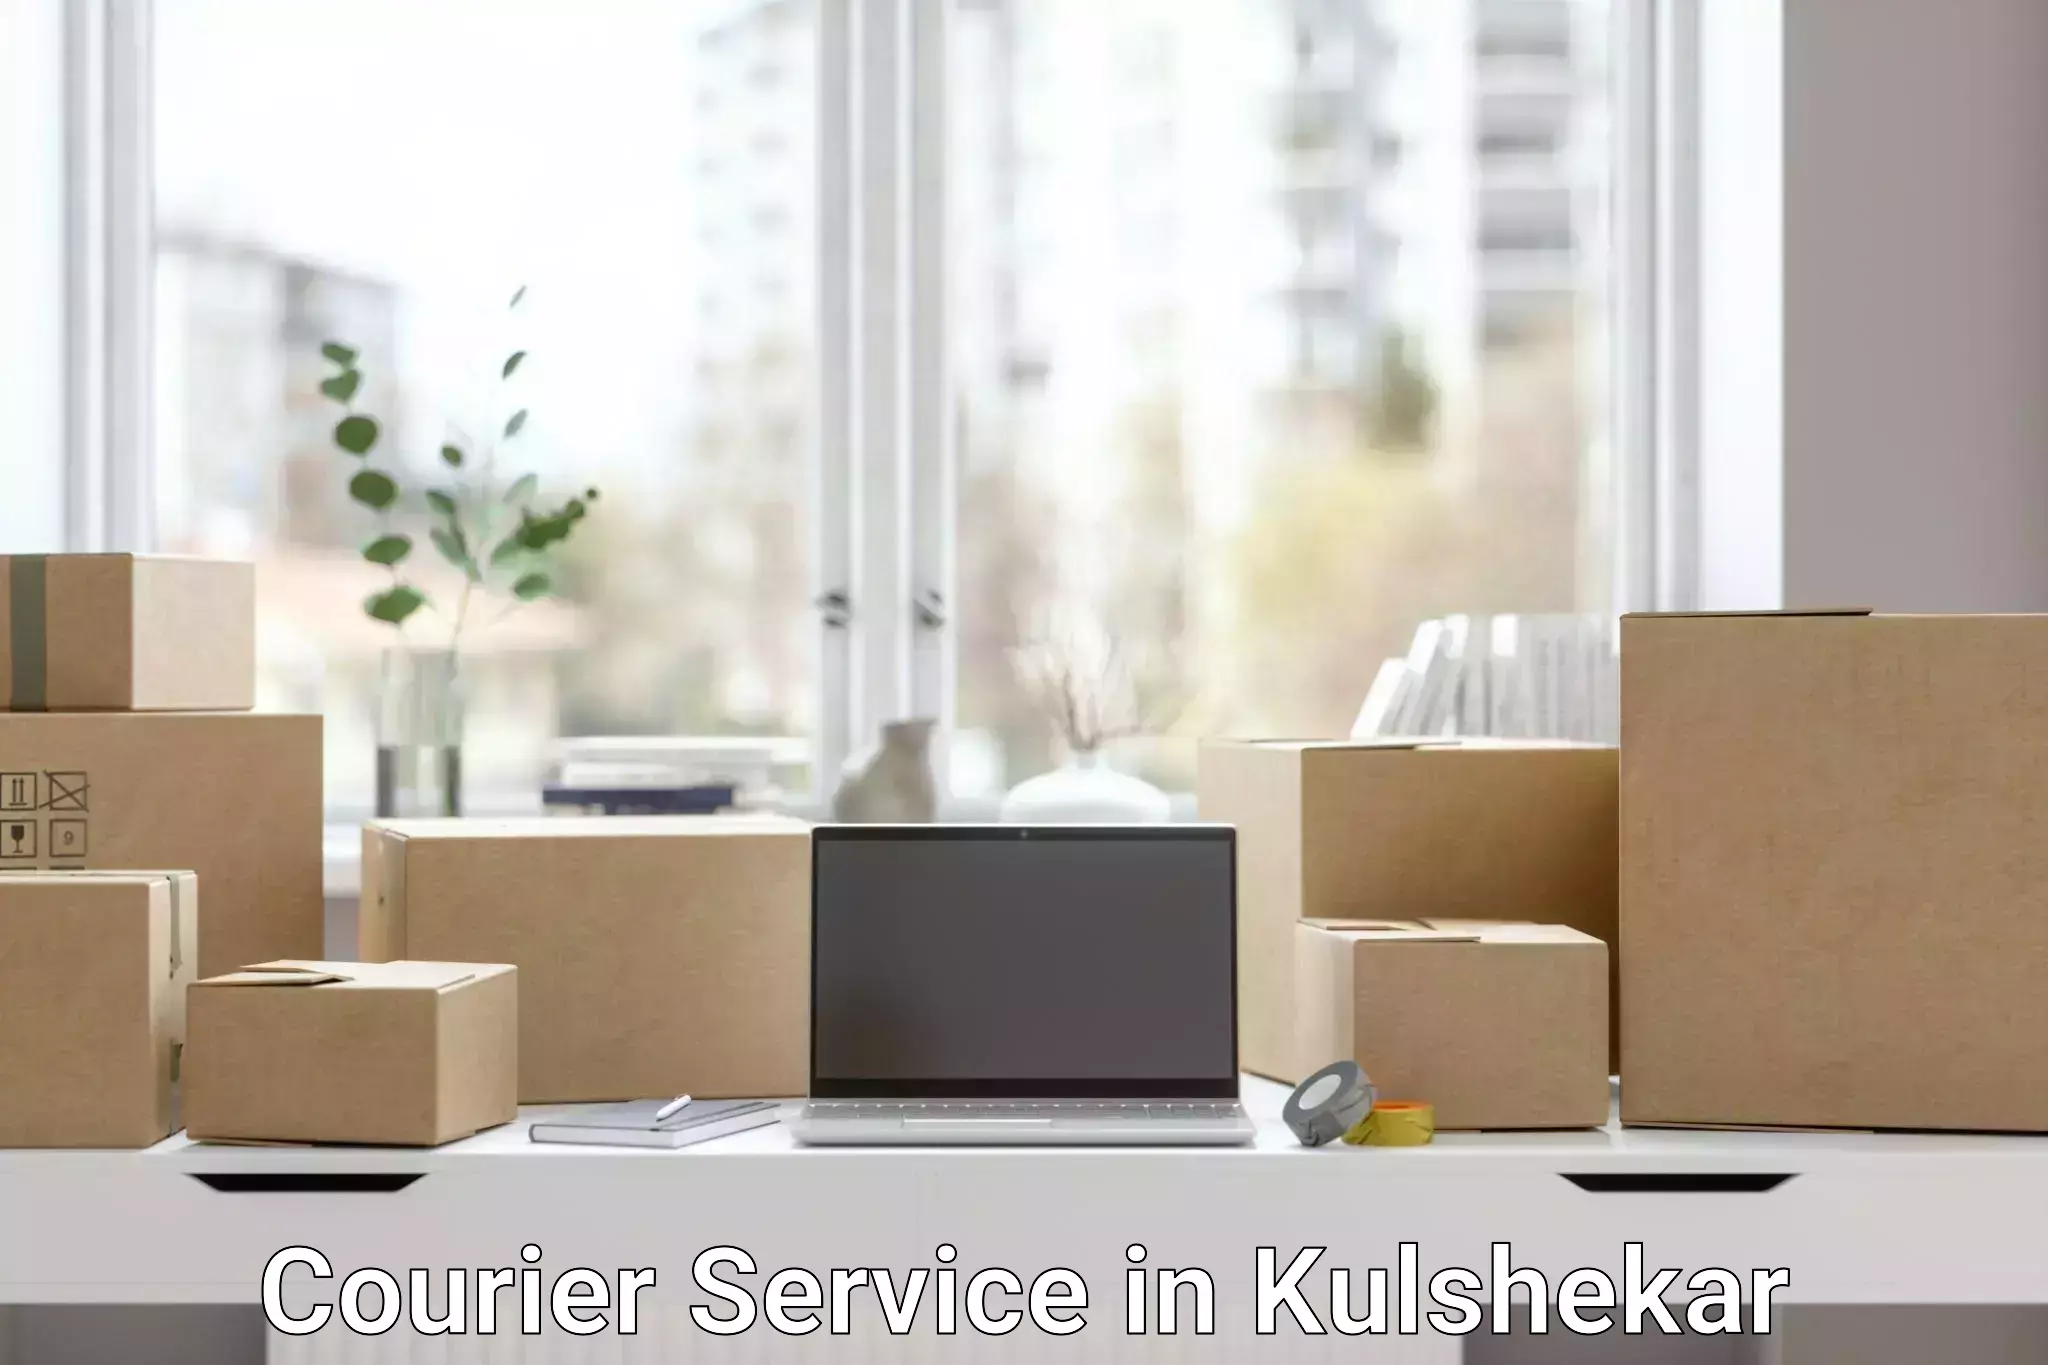 Business shipping needs in Kulshekar